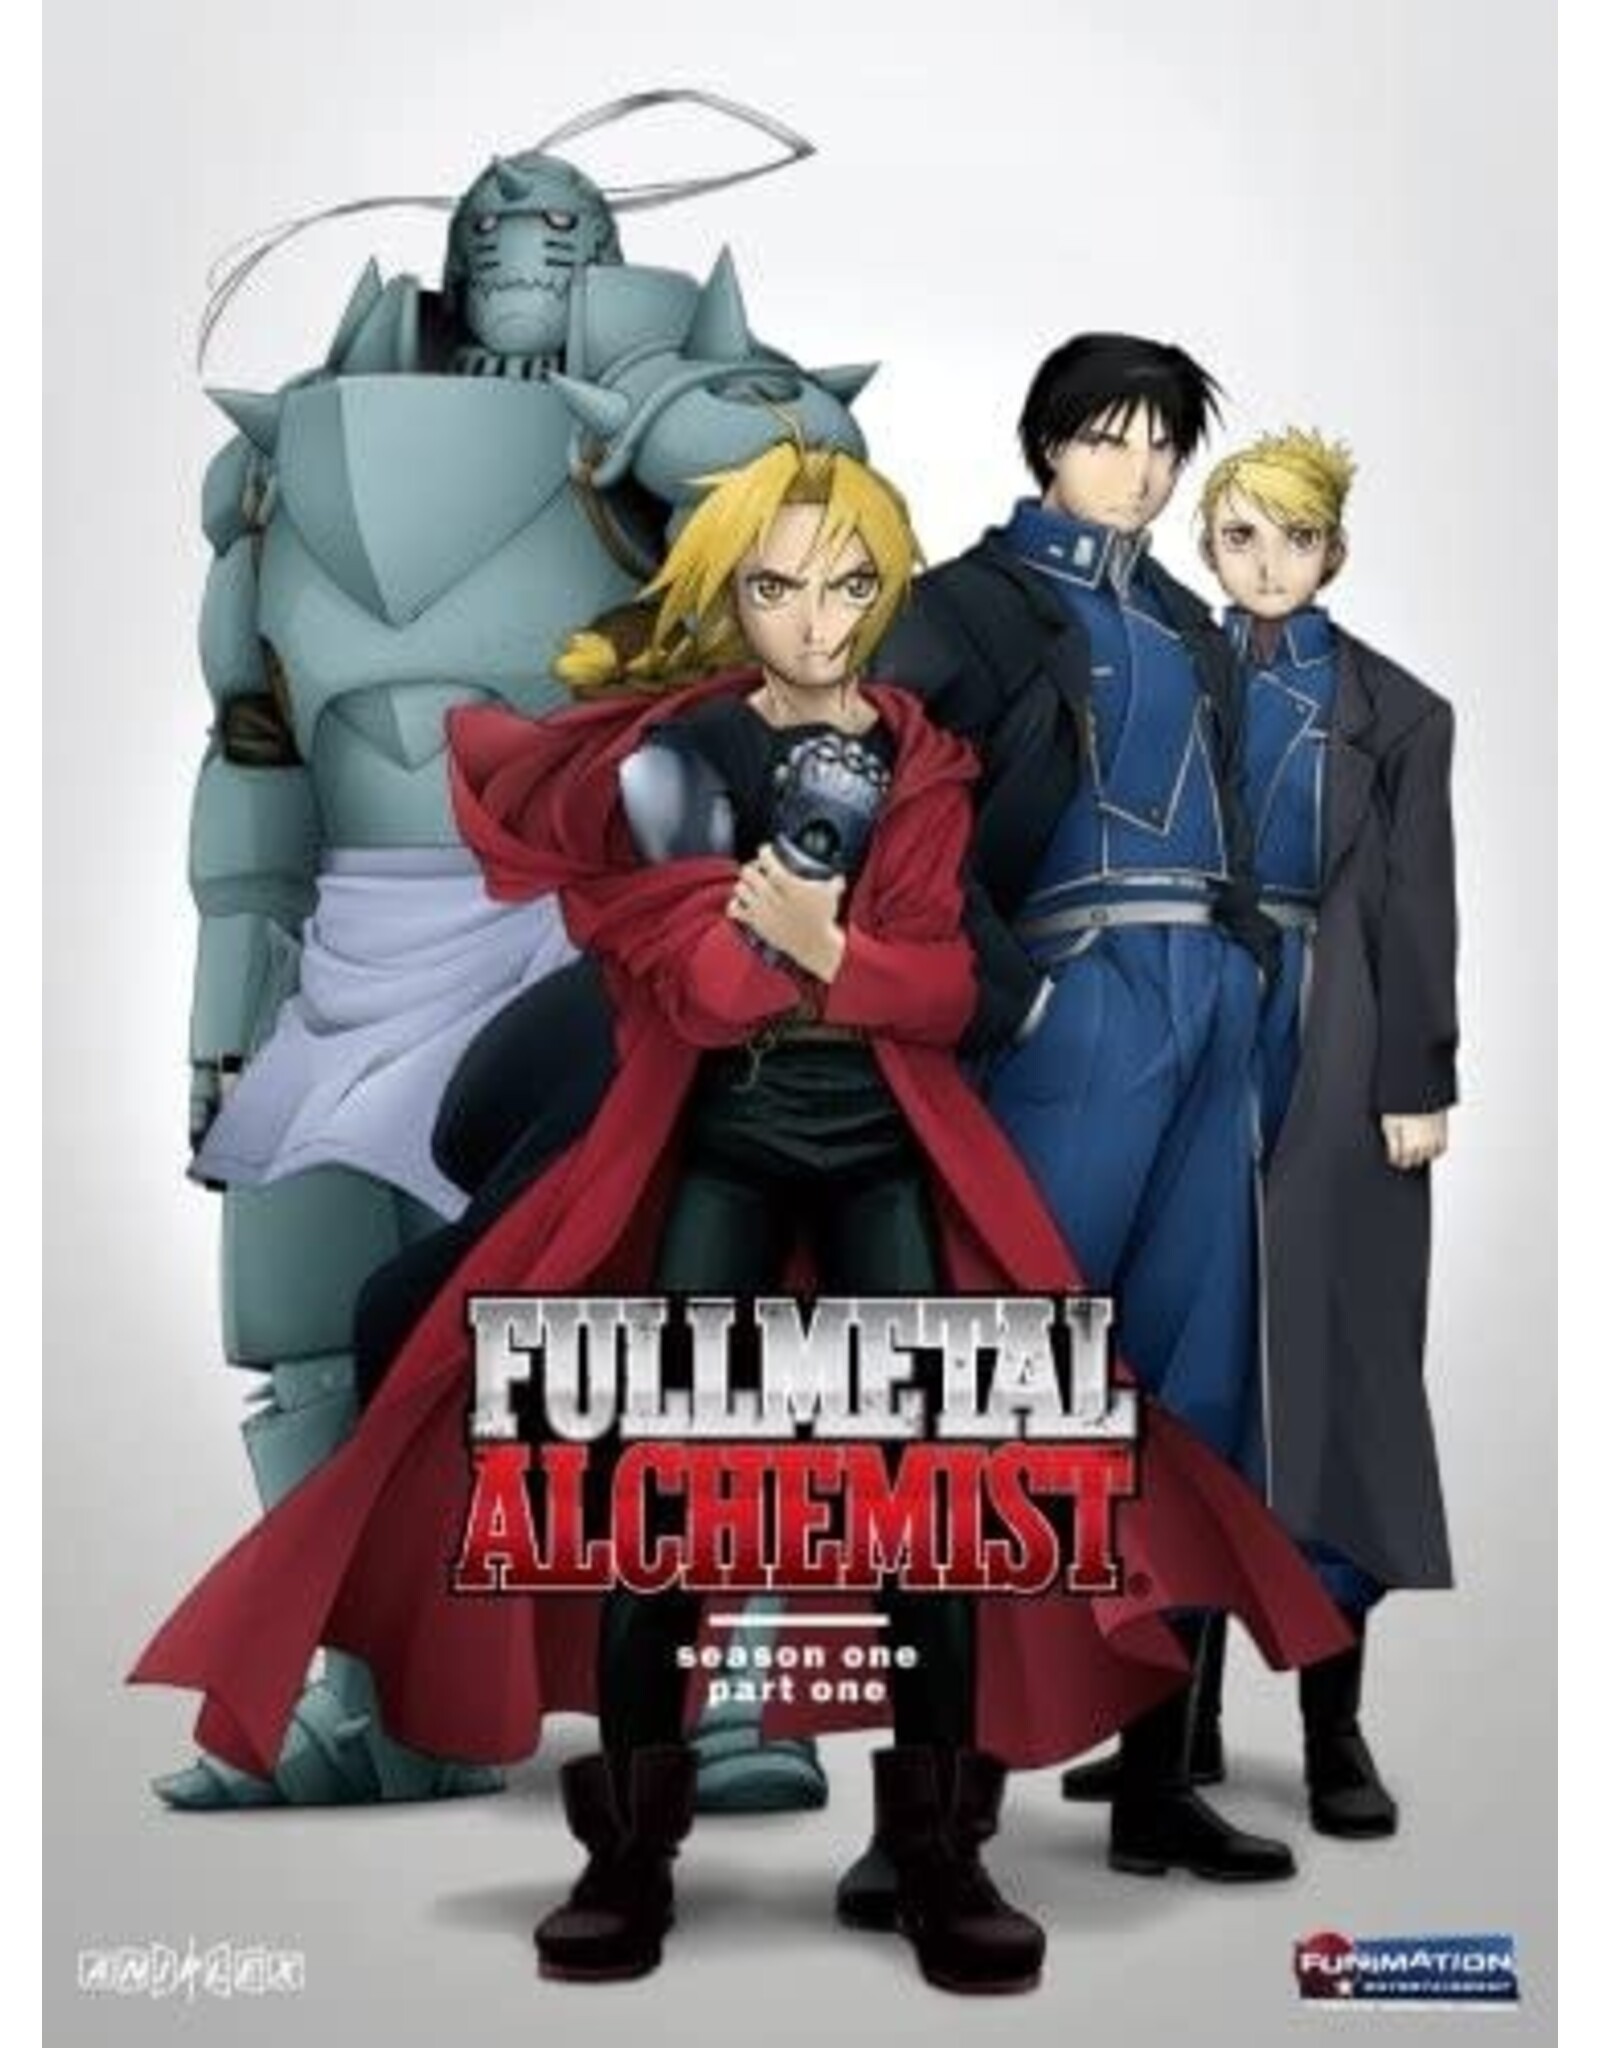 Anime & Animation Fullmetal Alchemist Season One Part One (Brand New)